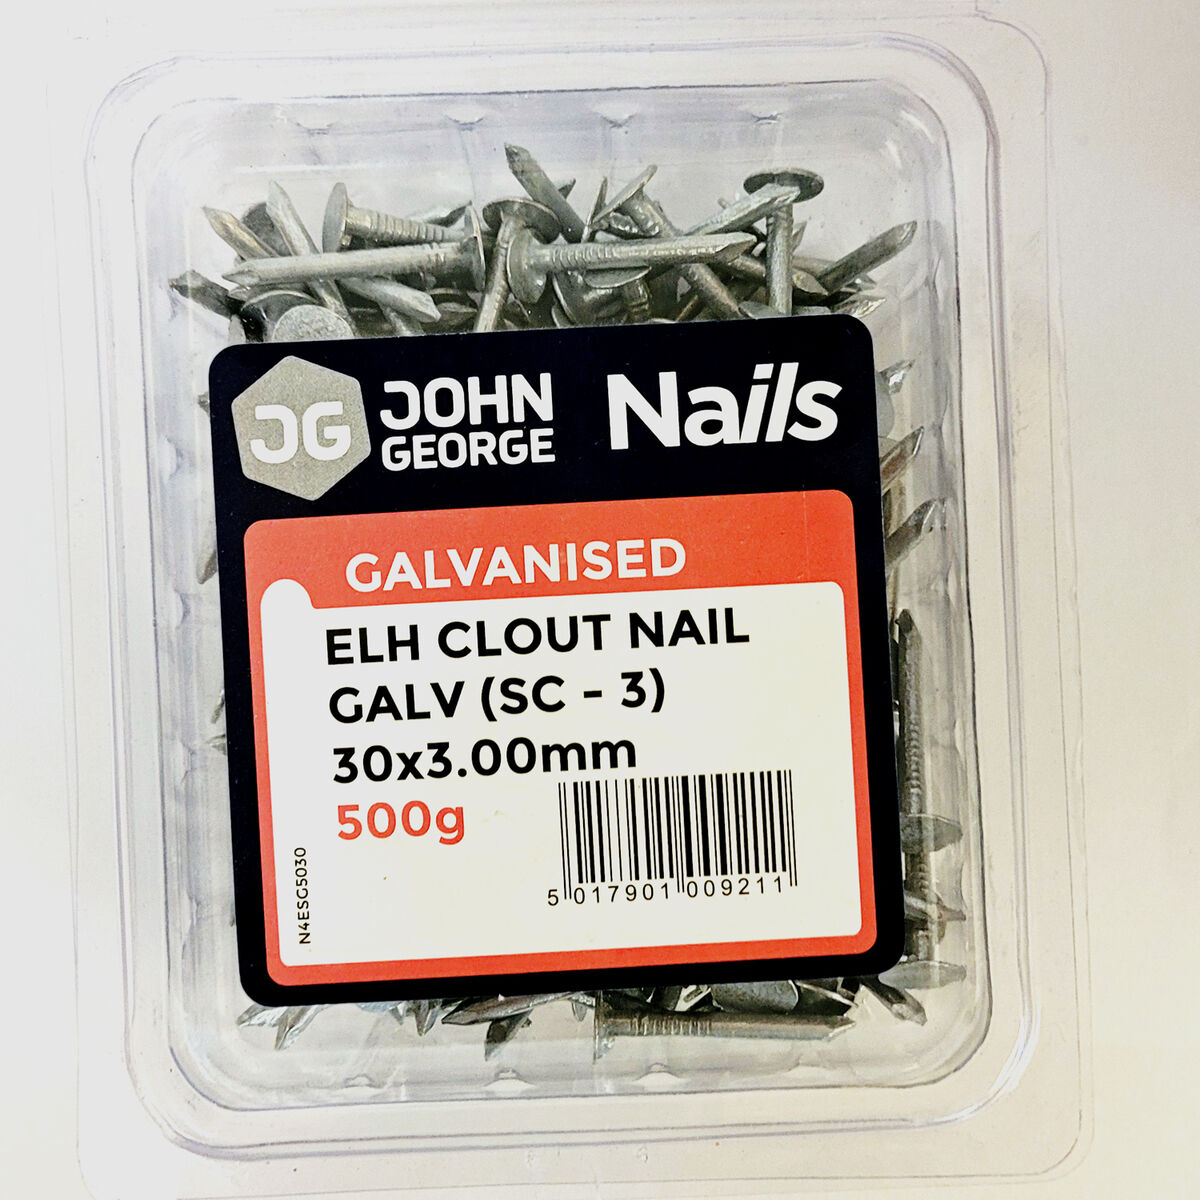 Clout nails web.jpg